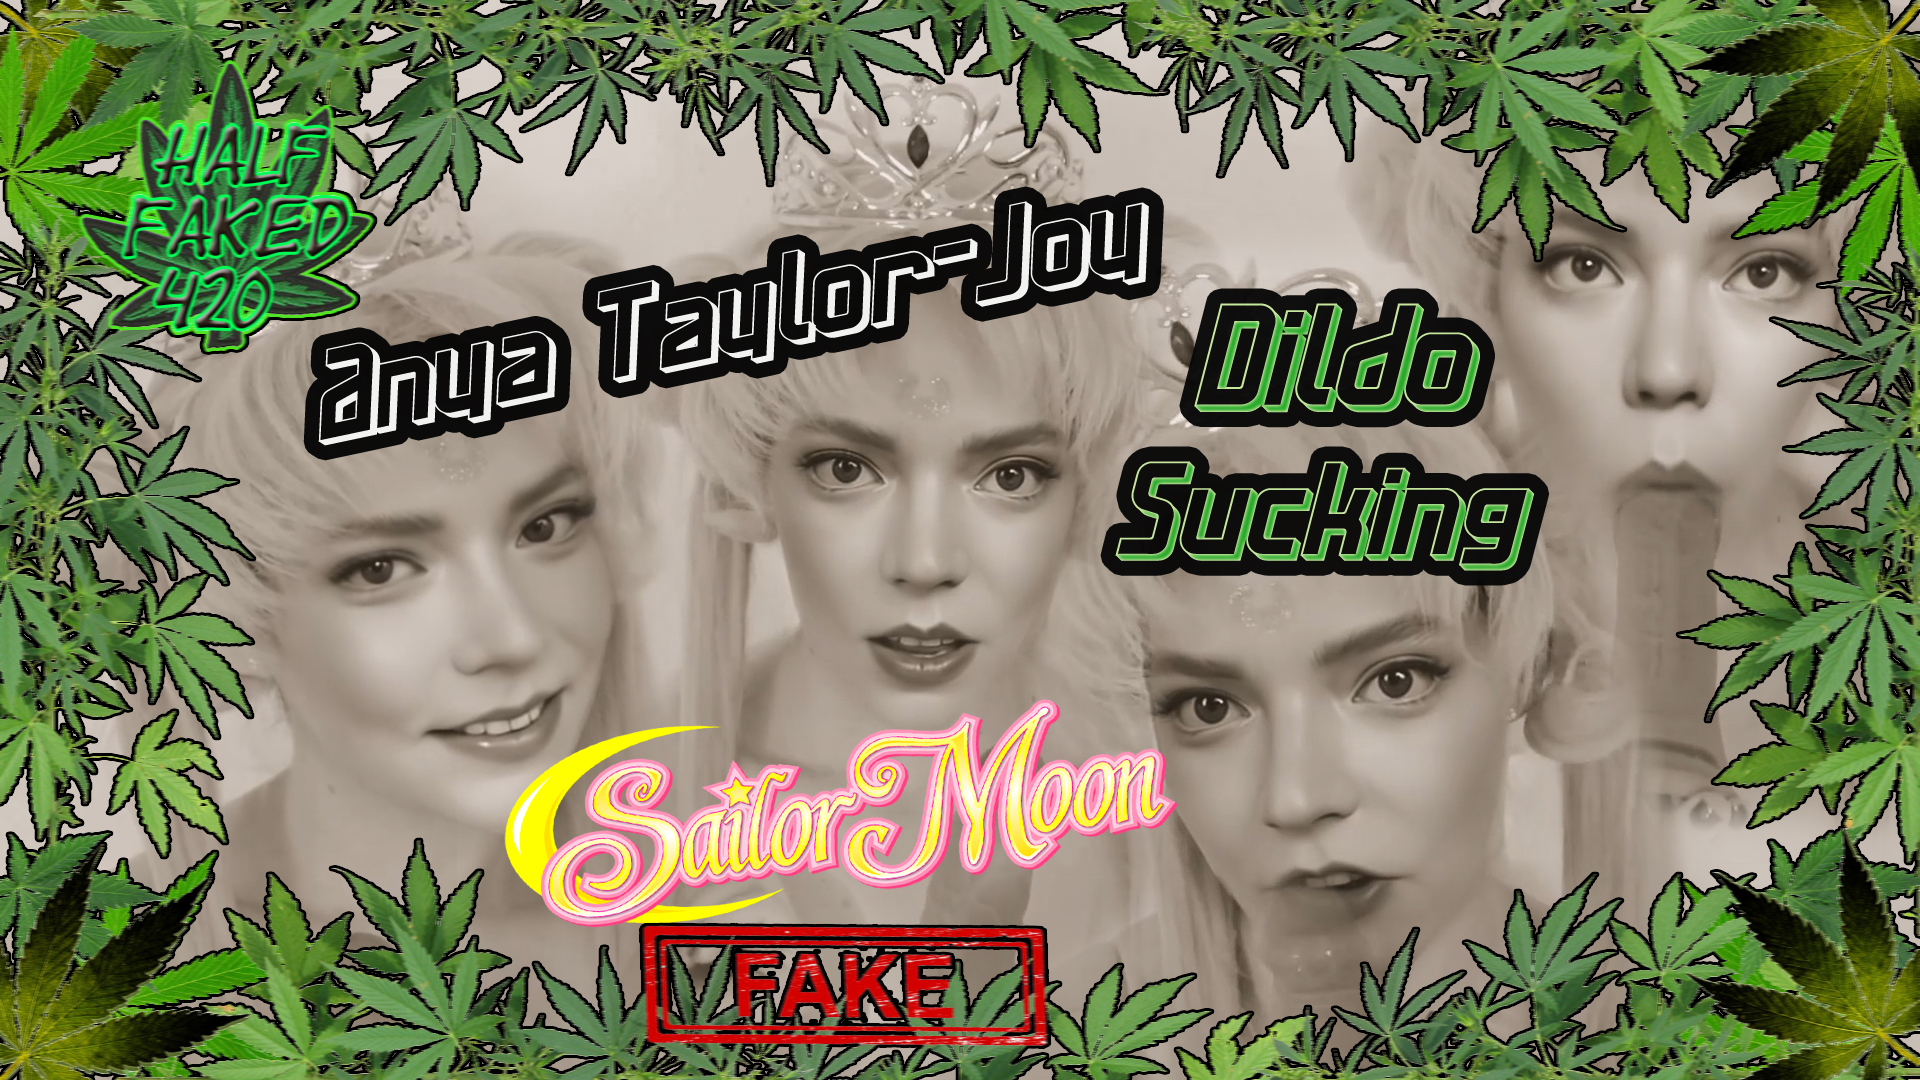 Anya Taylor-Joy - Dildo sucking as sailor moon (Sepia) | FAKE